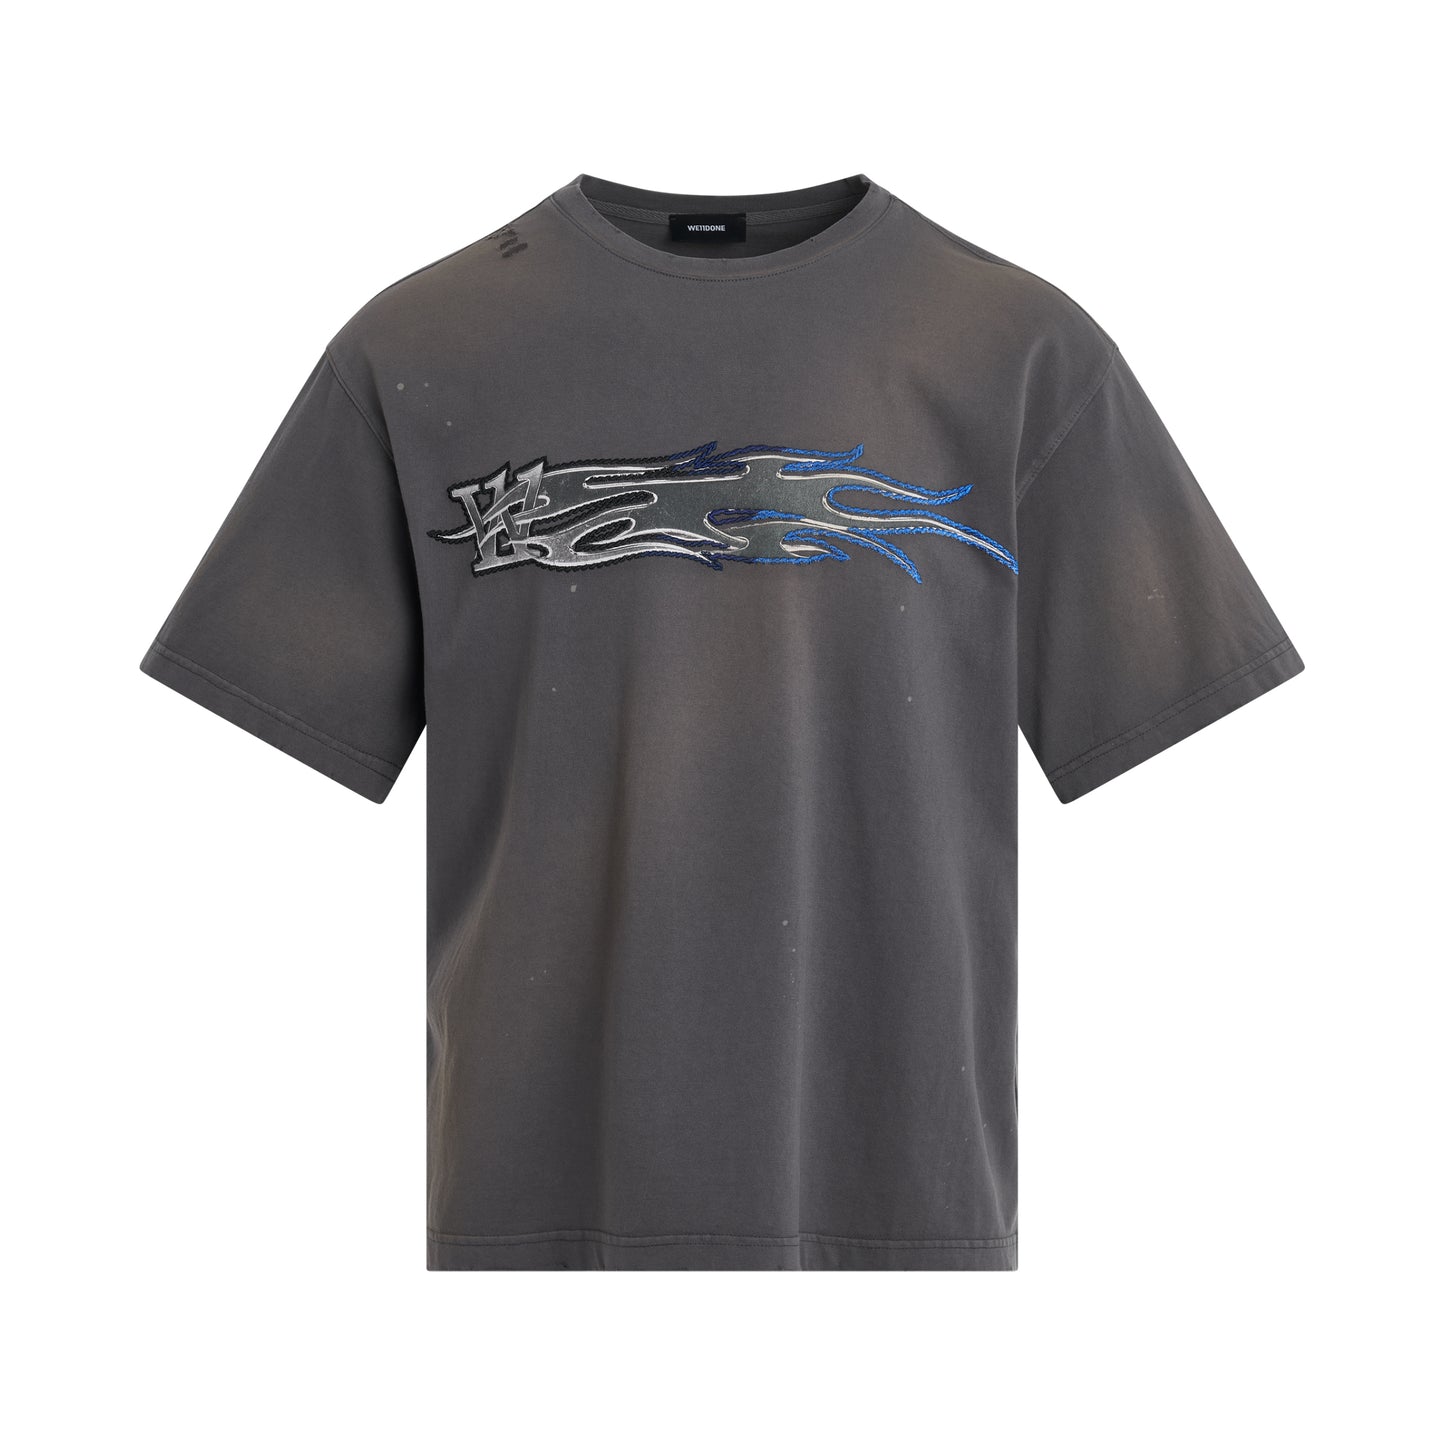 Metallic Print T-Shirt in Charcoal